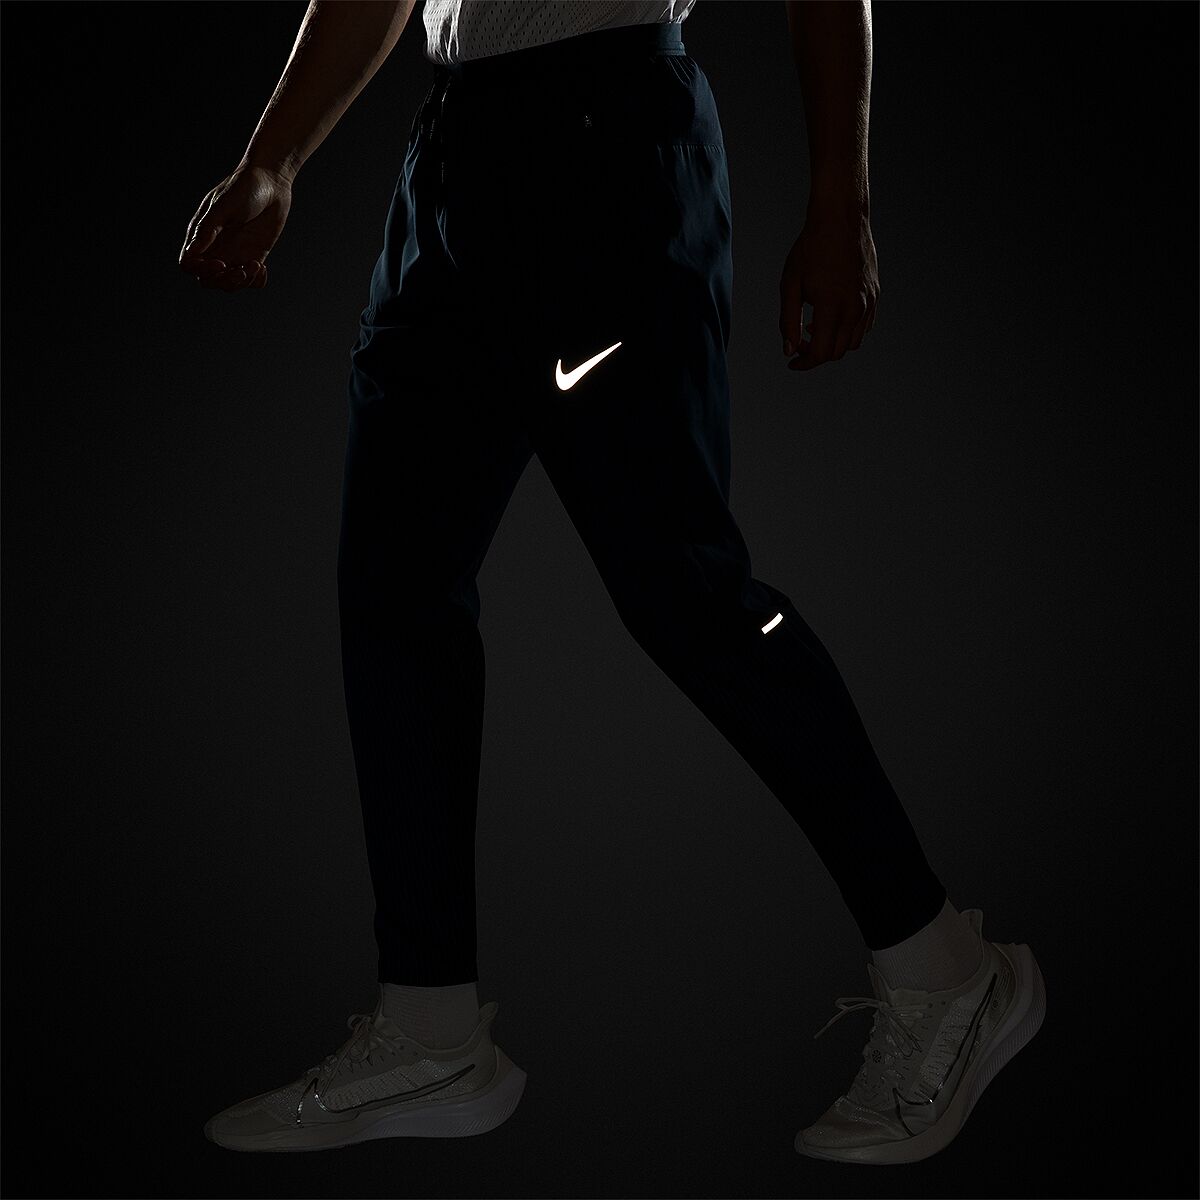 Nike Phenom Elite Future Fast Hybrid Pant - Men's - Clothing